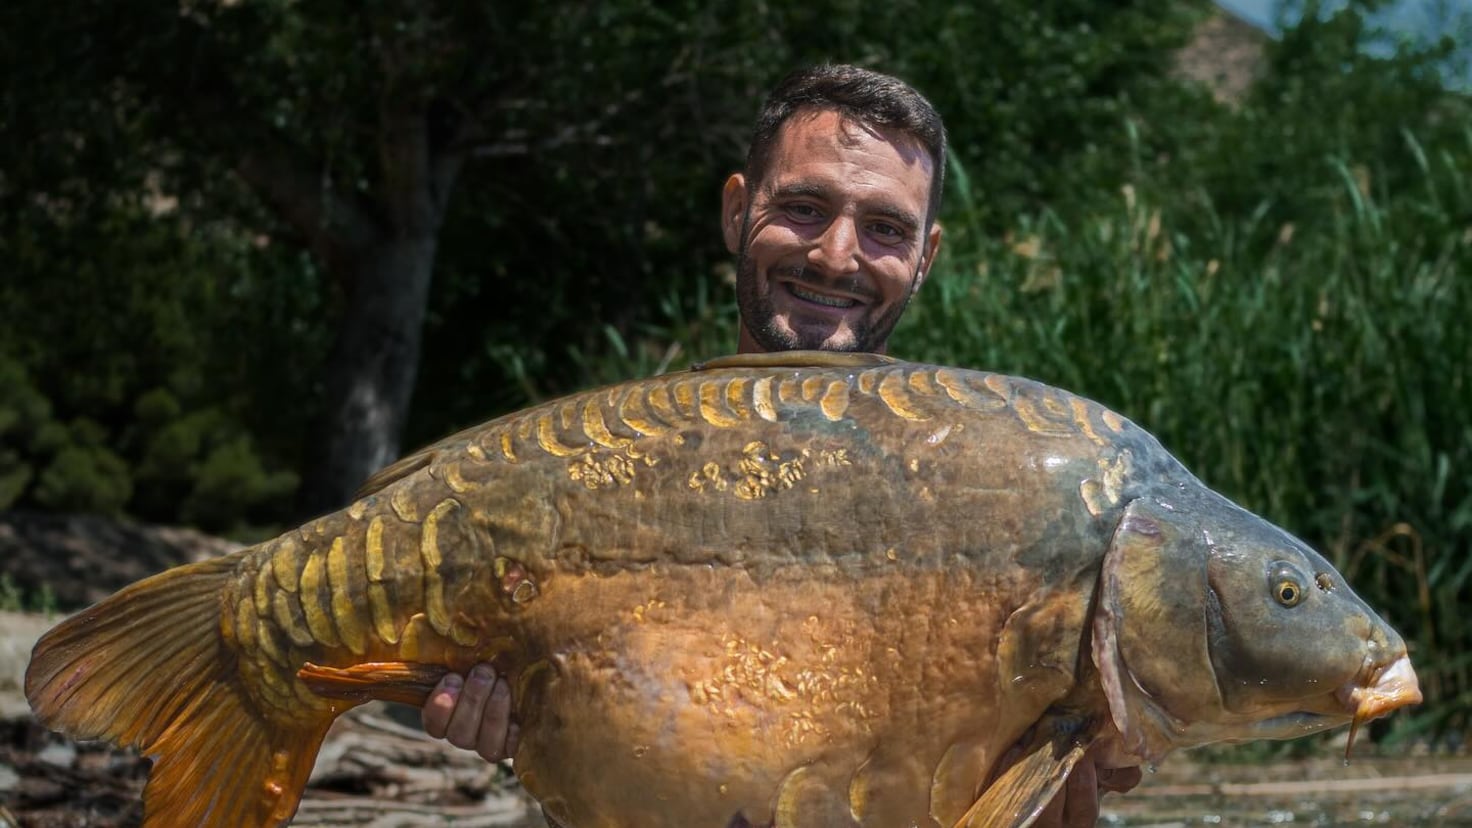 Catch a carp weighing more than 27 kilos in a Zaragoza reservoir: It's a dream
